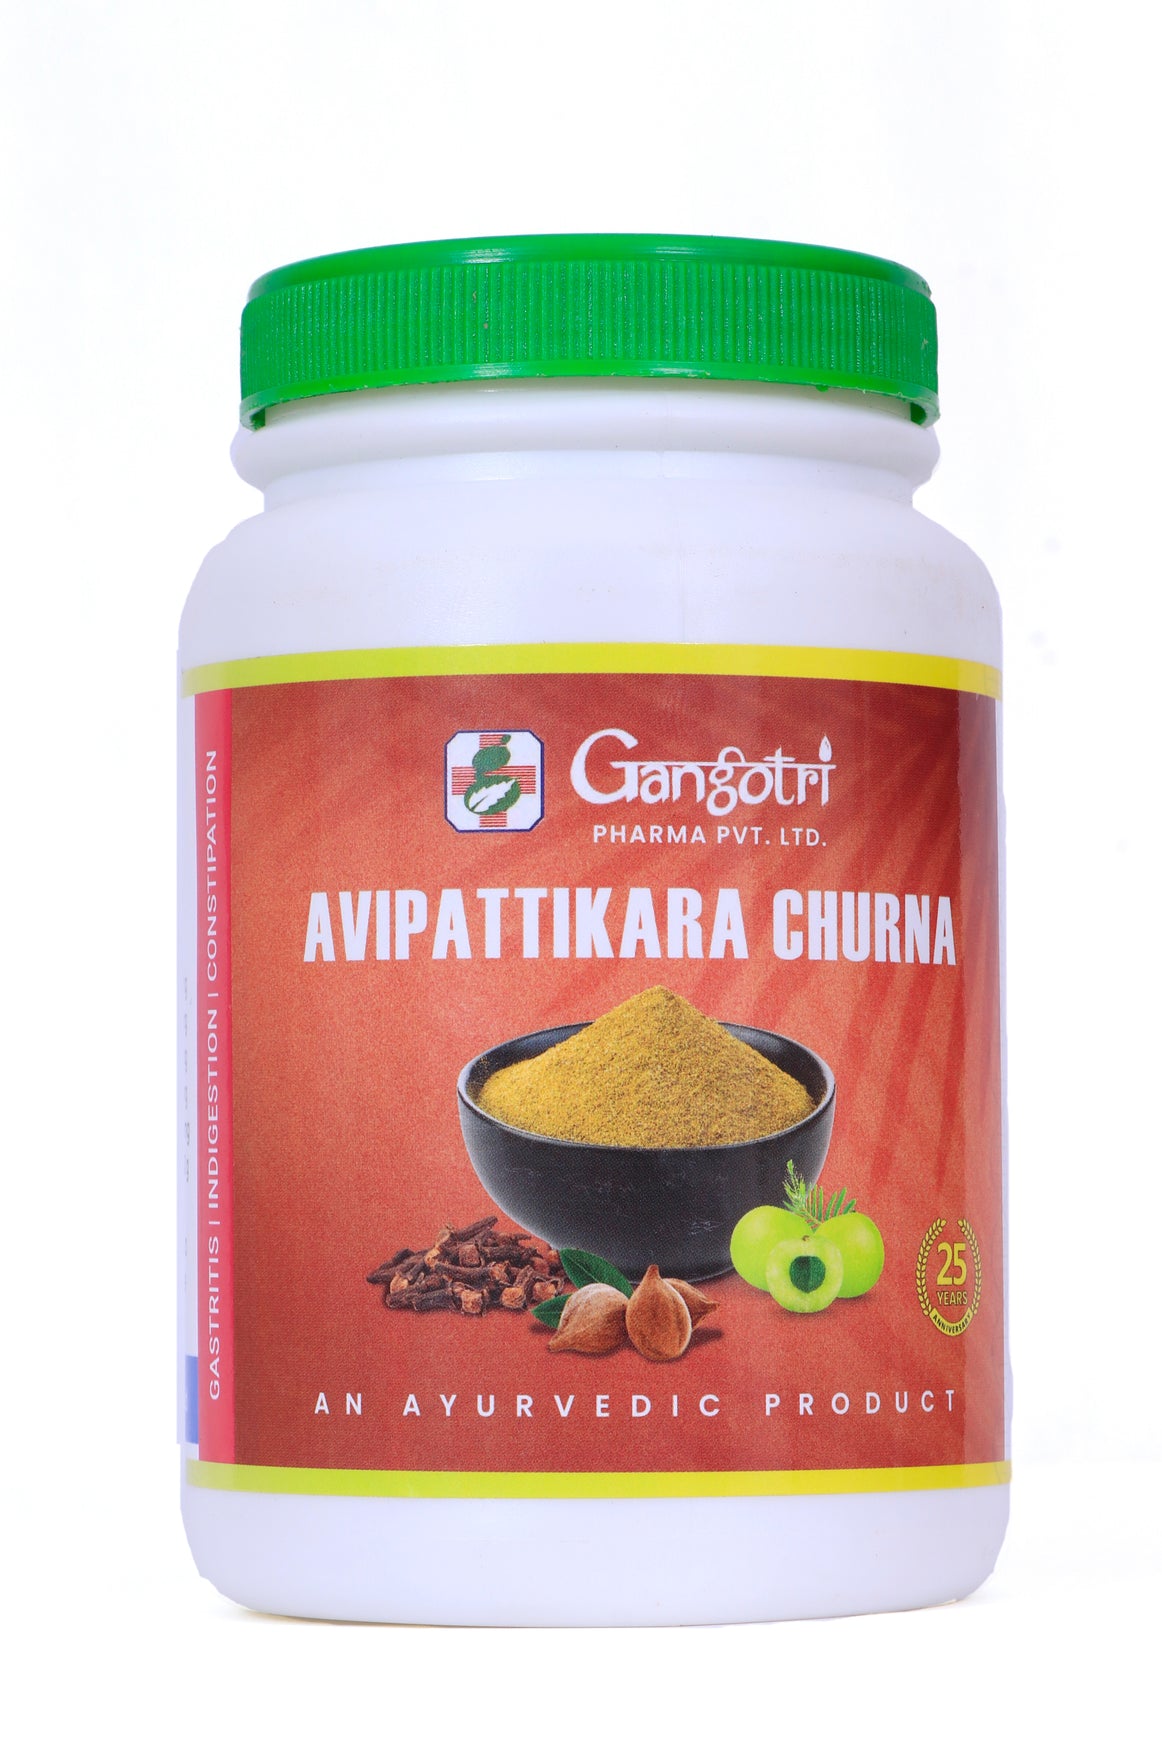 Avipattikar Churna: Experience Relief from Digestive Discomfort